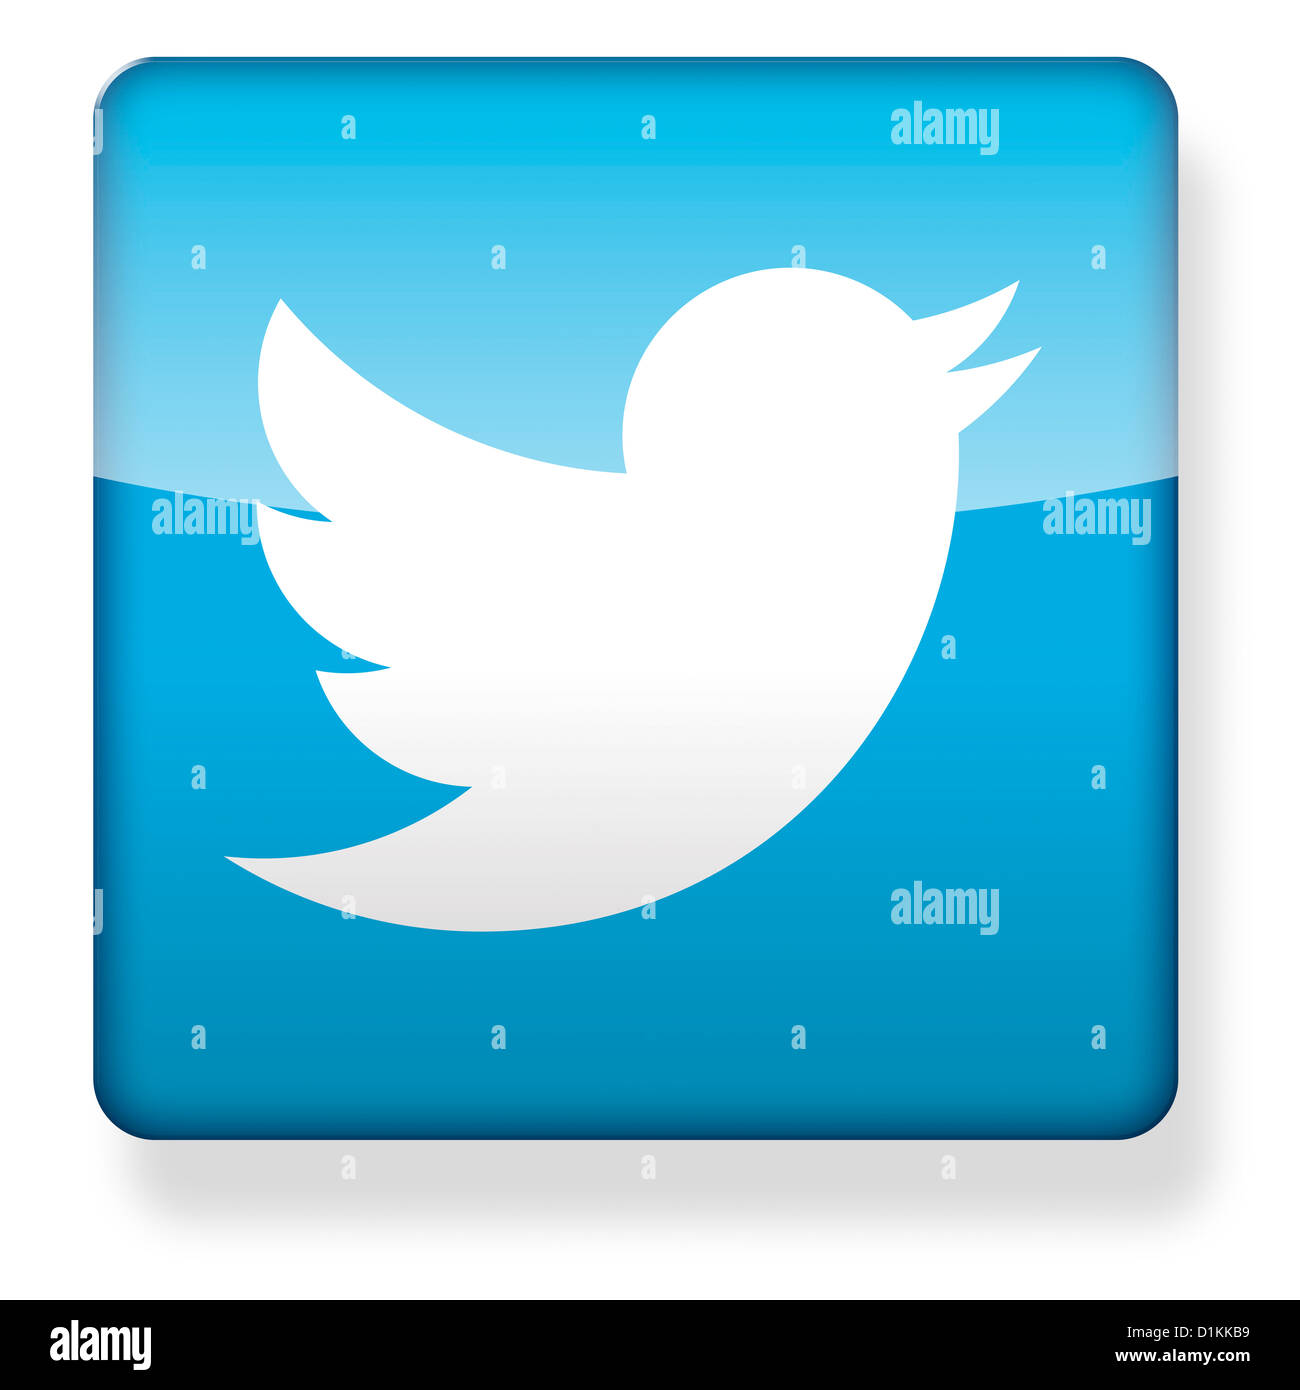 Twitter logo as an app icon Stock Photo